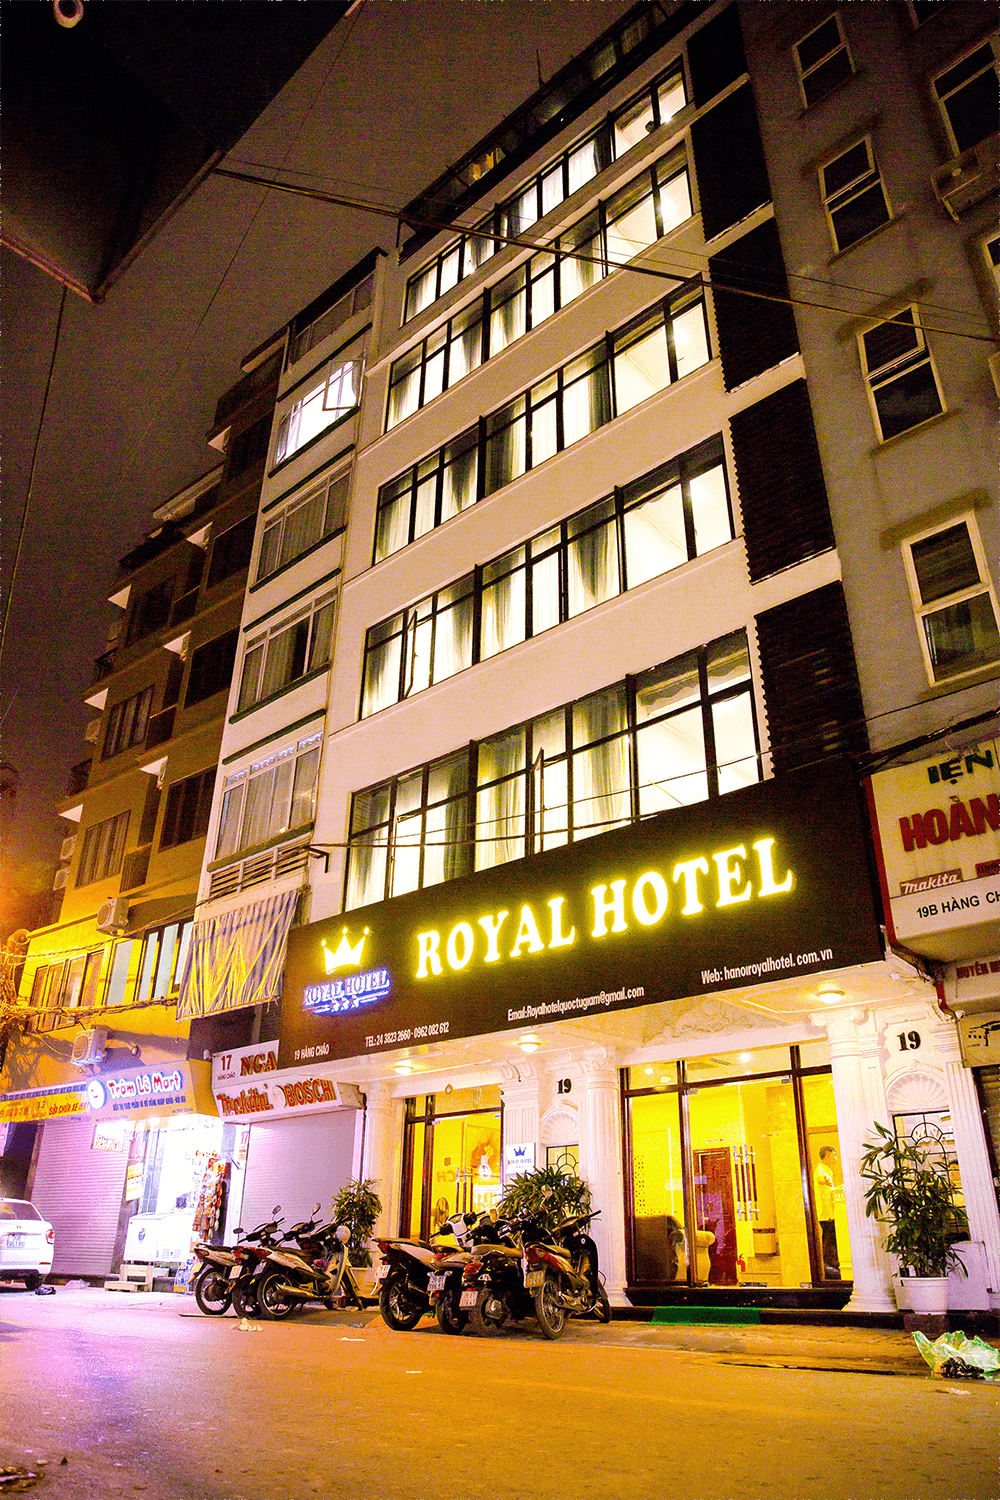 Royal Hotel Hanoi image 1